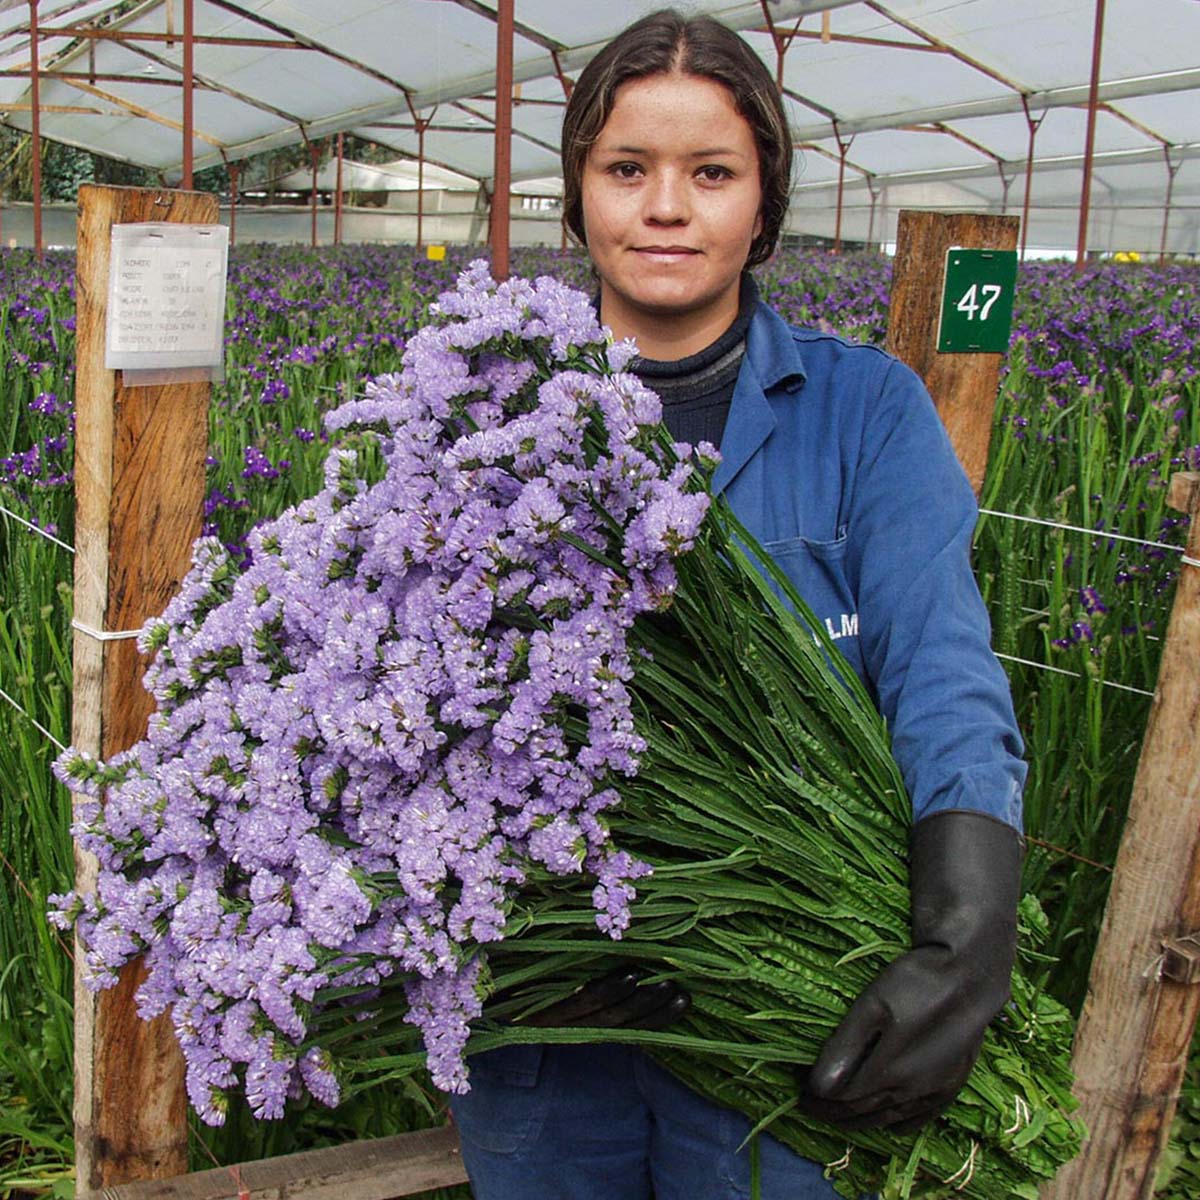 Jardines de los Andes grower on Thursd feature